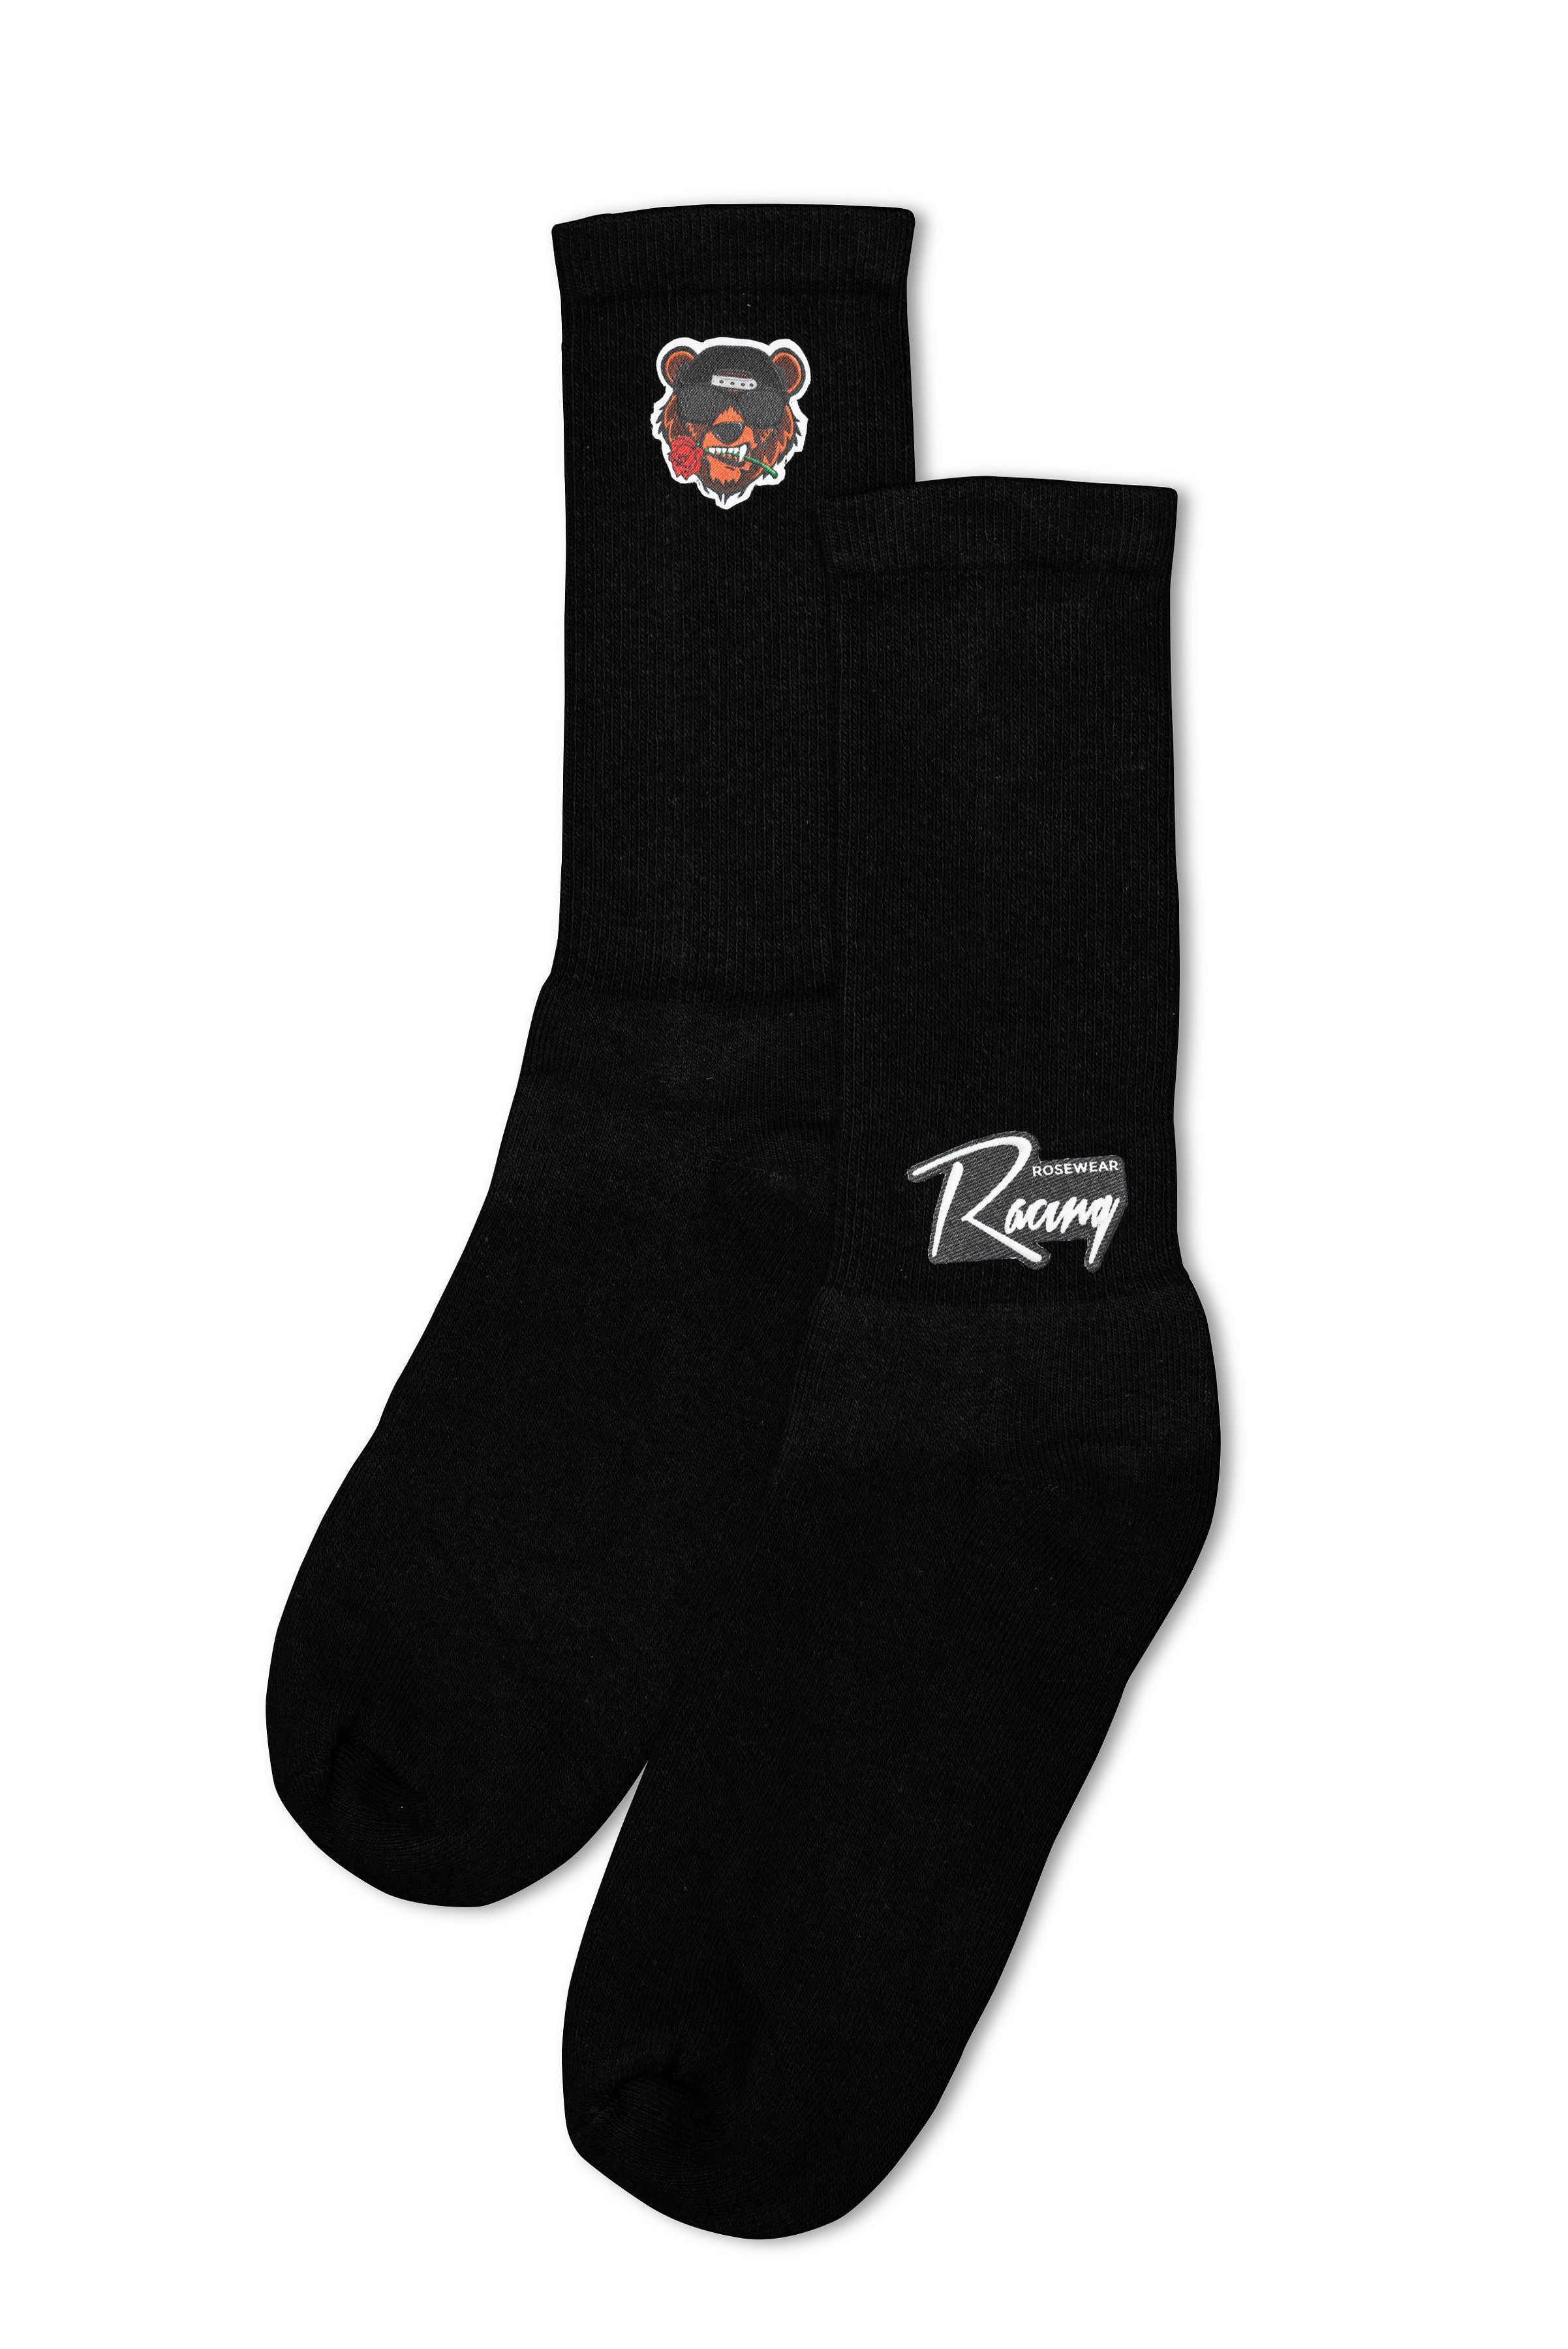 Rosewear Racing Socks